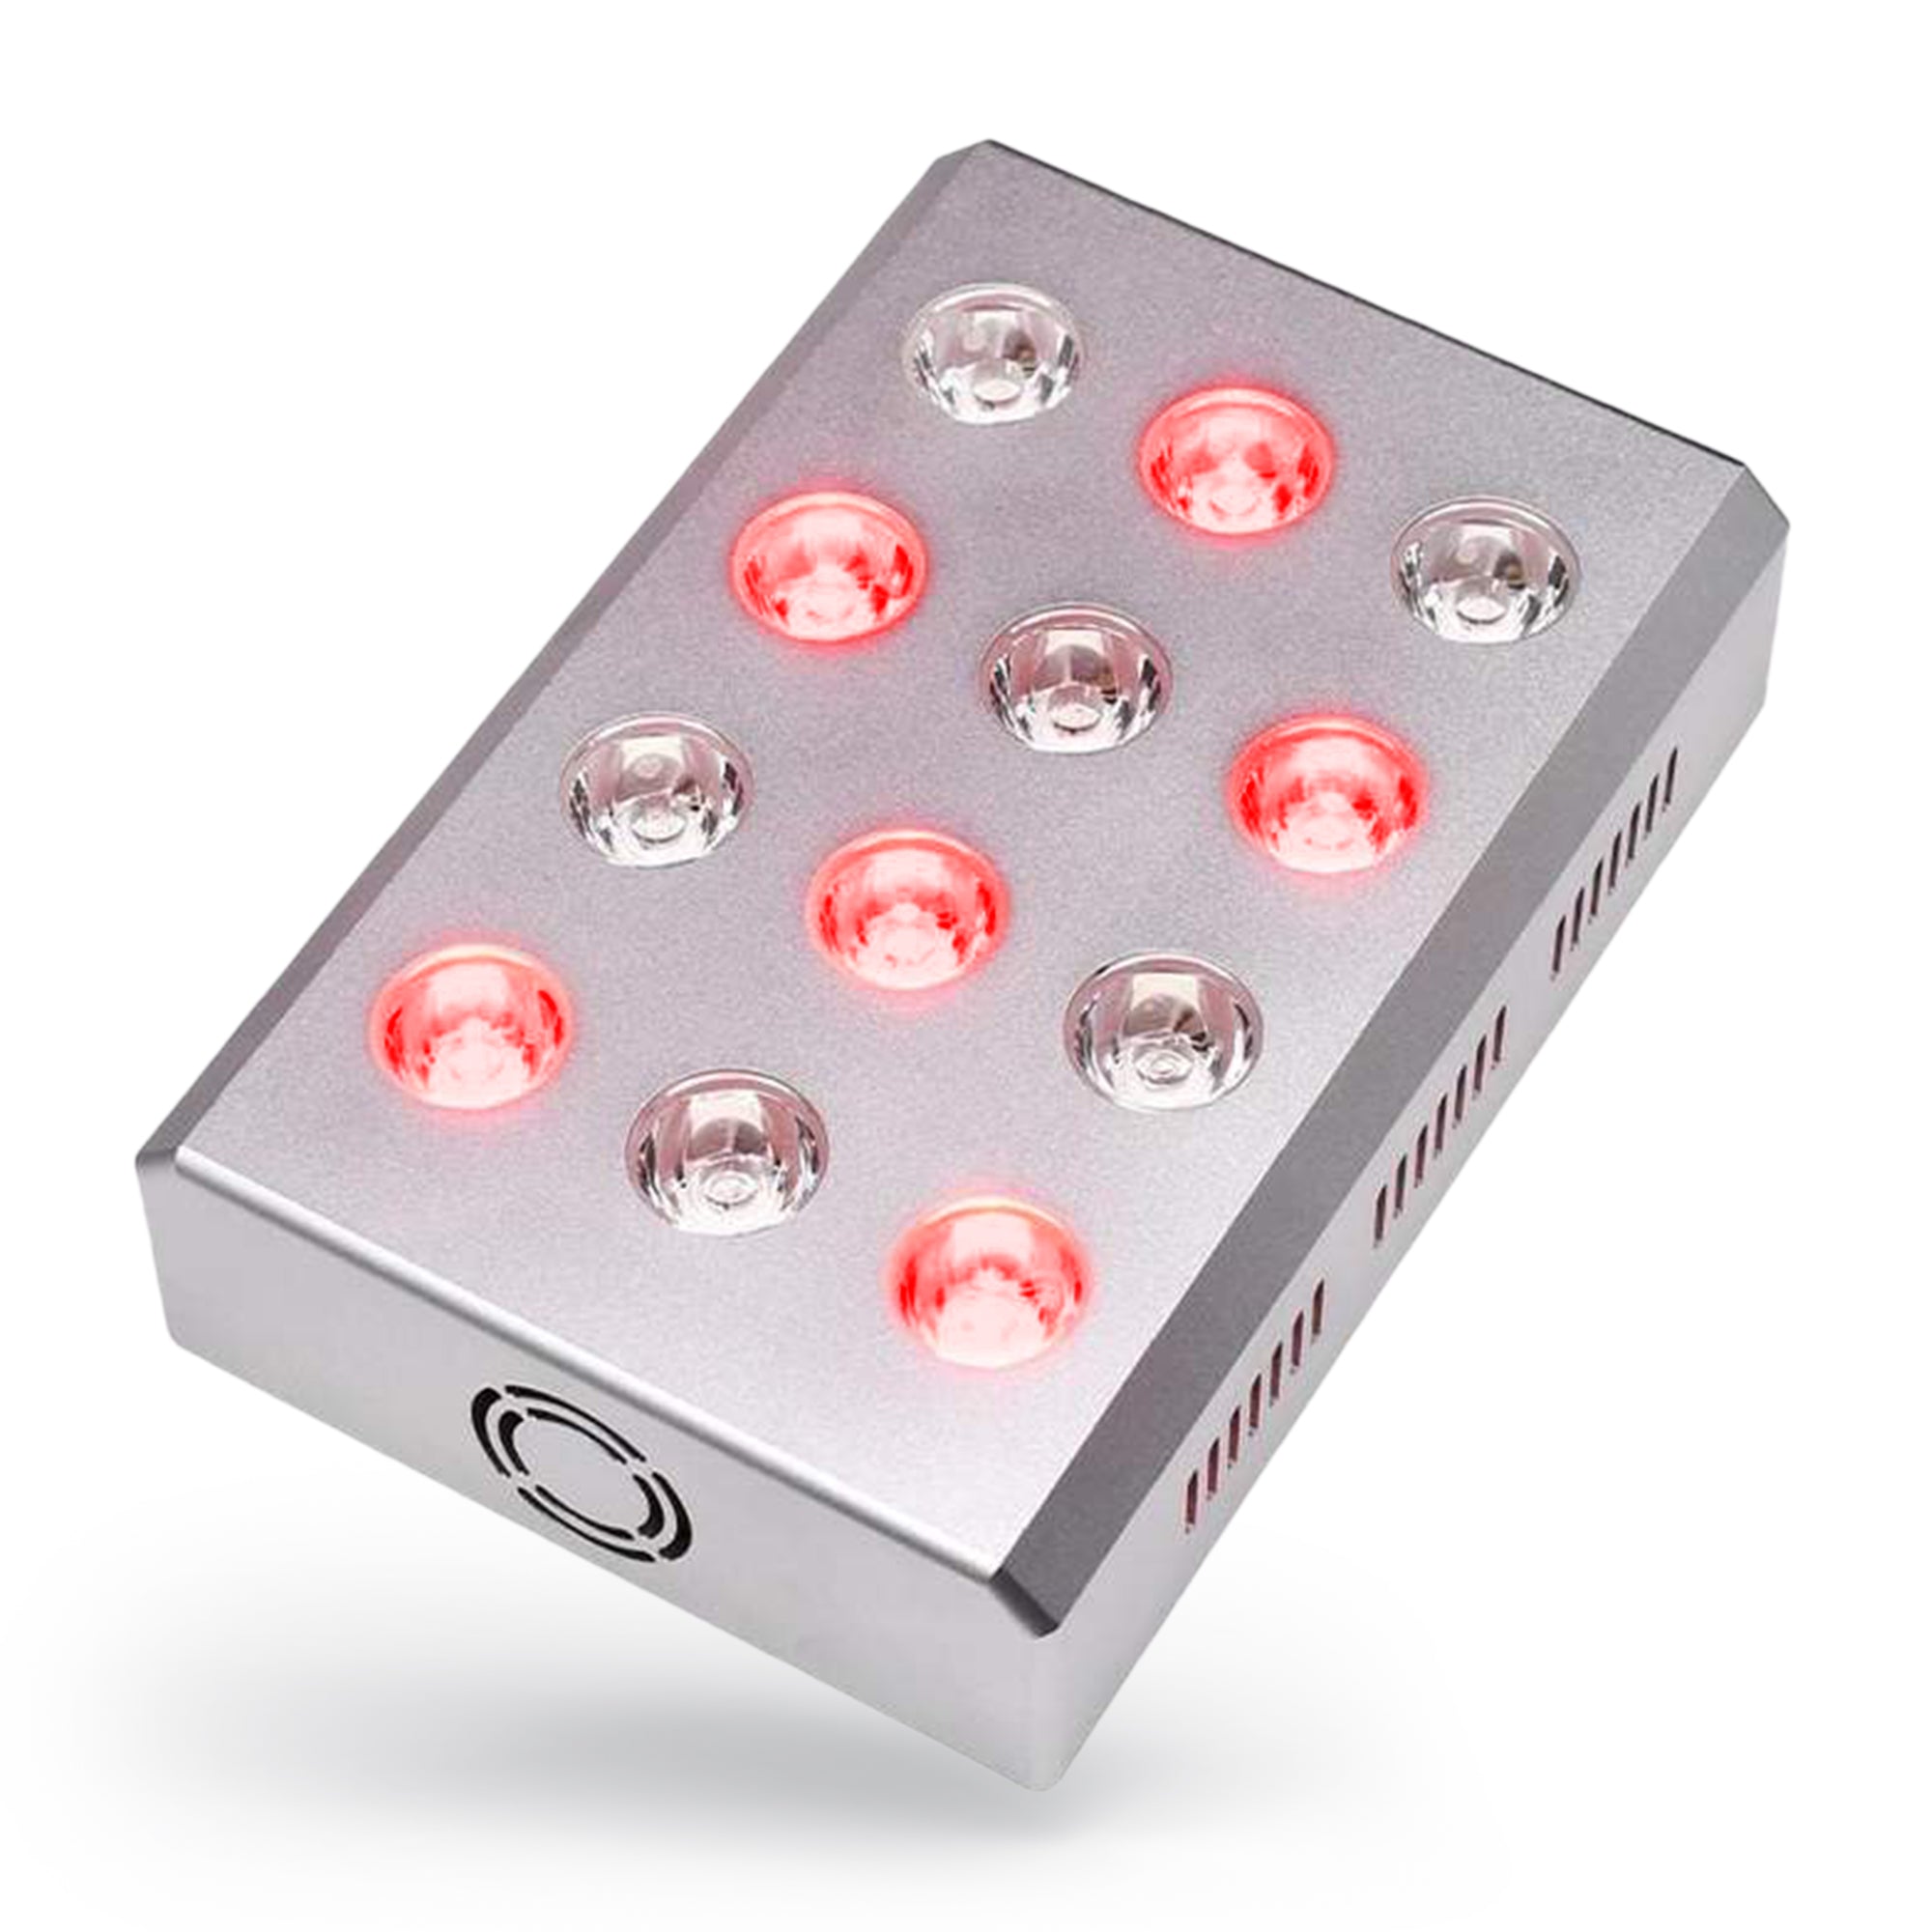 Kala Red Light Mini - Canada's #1 Portable Red Light Device